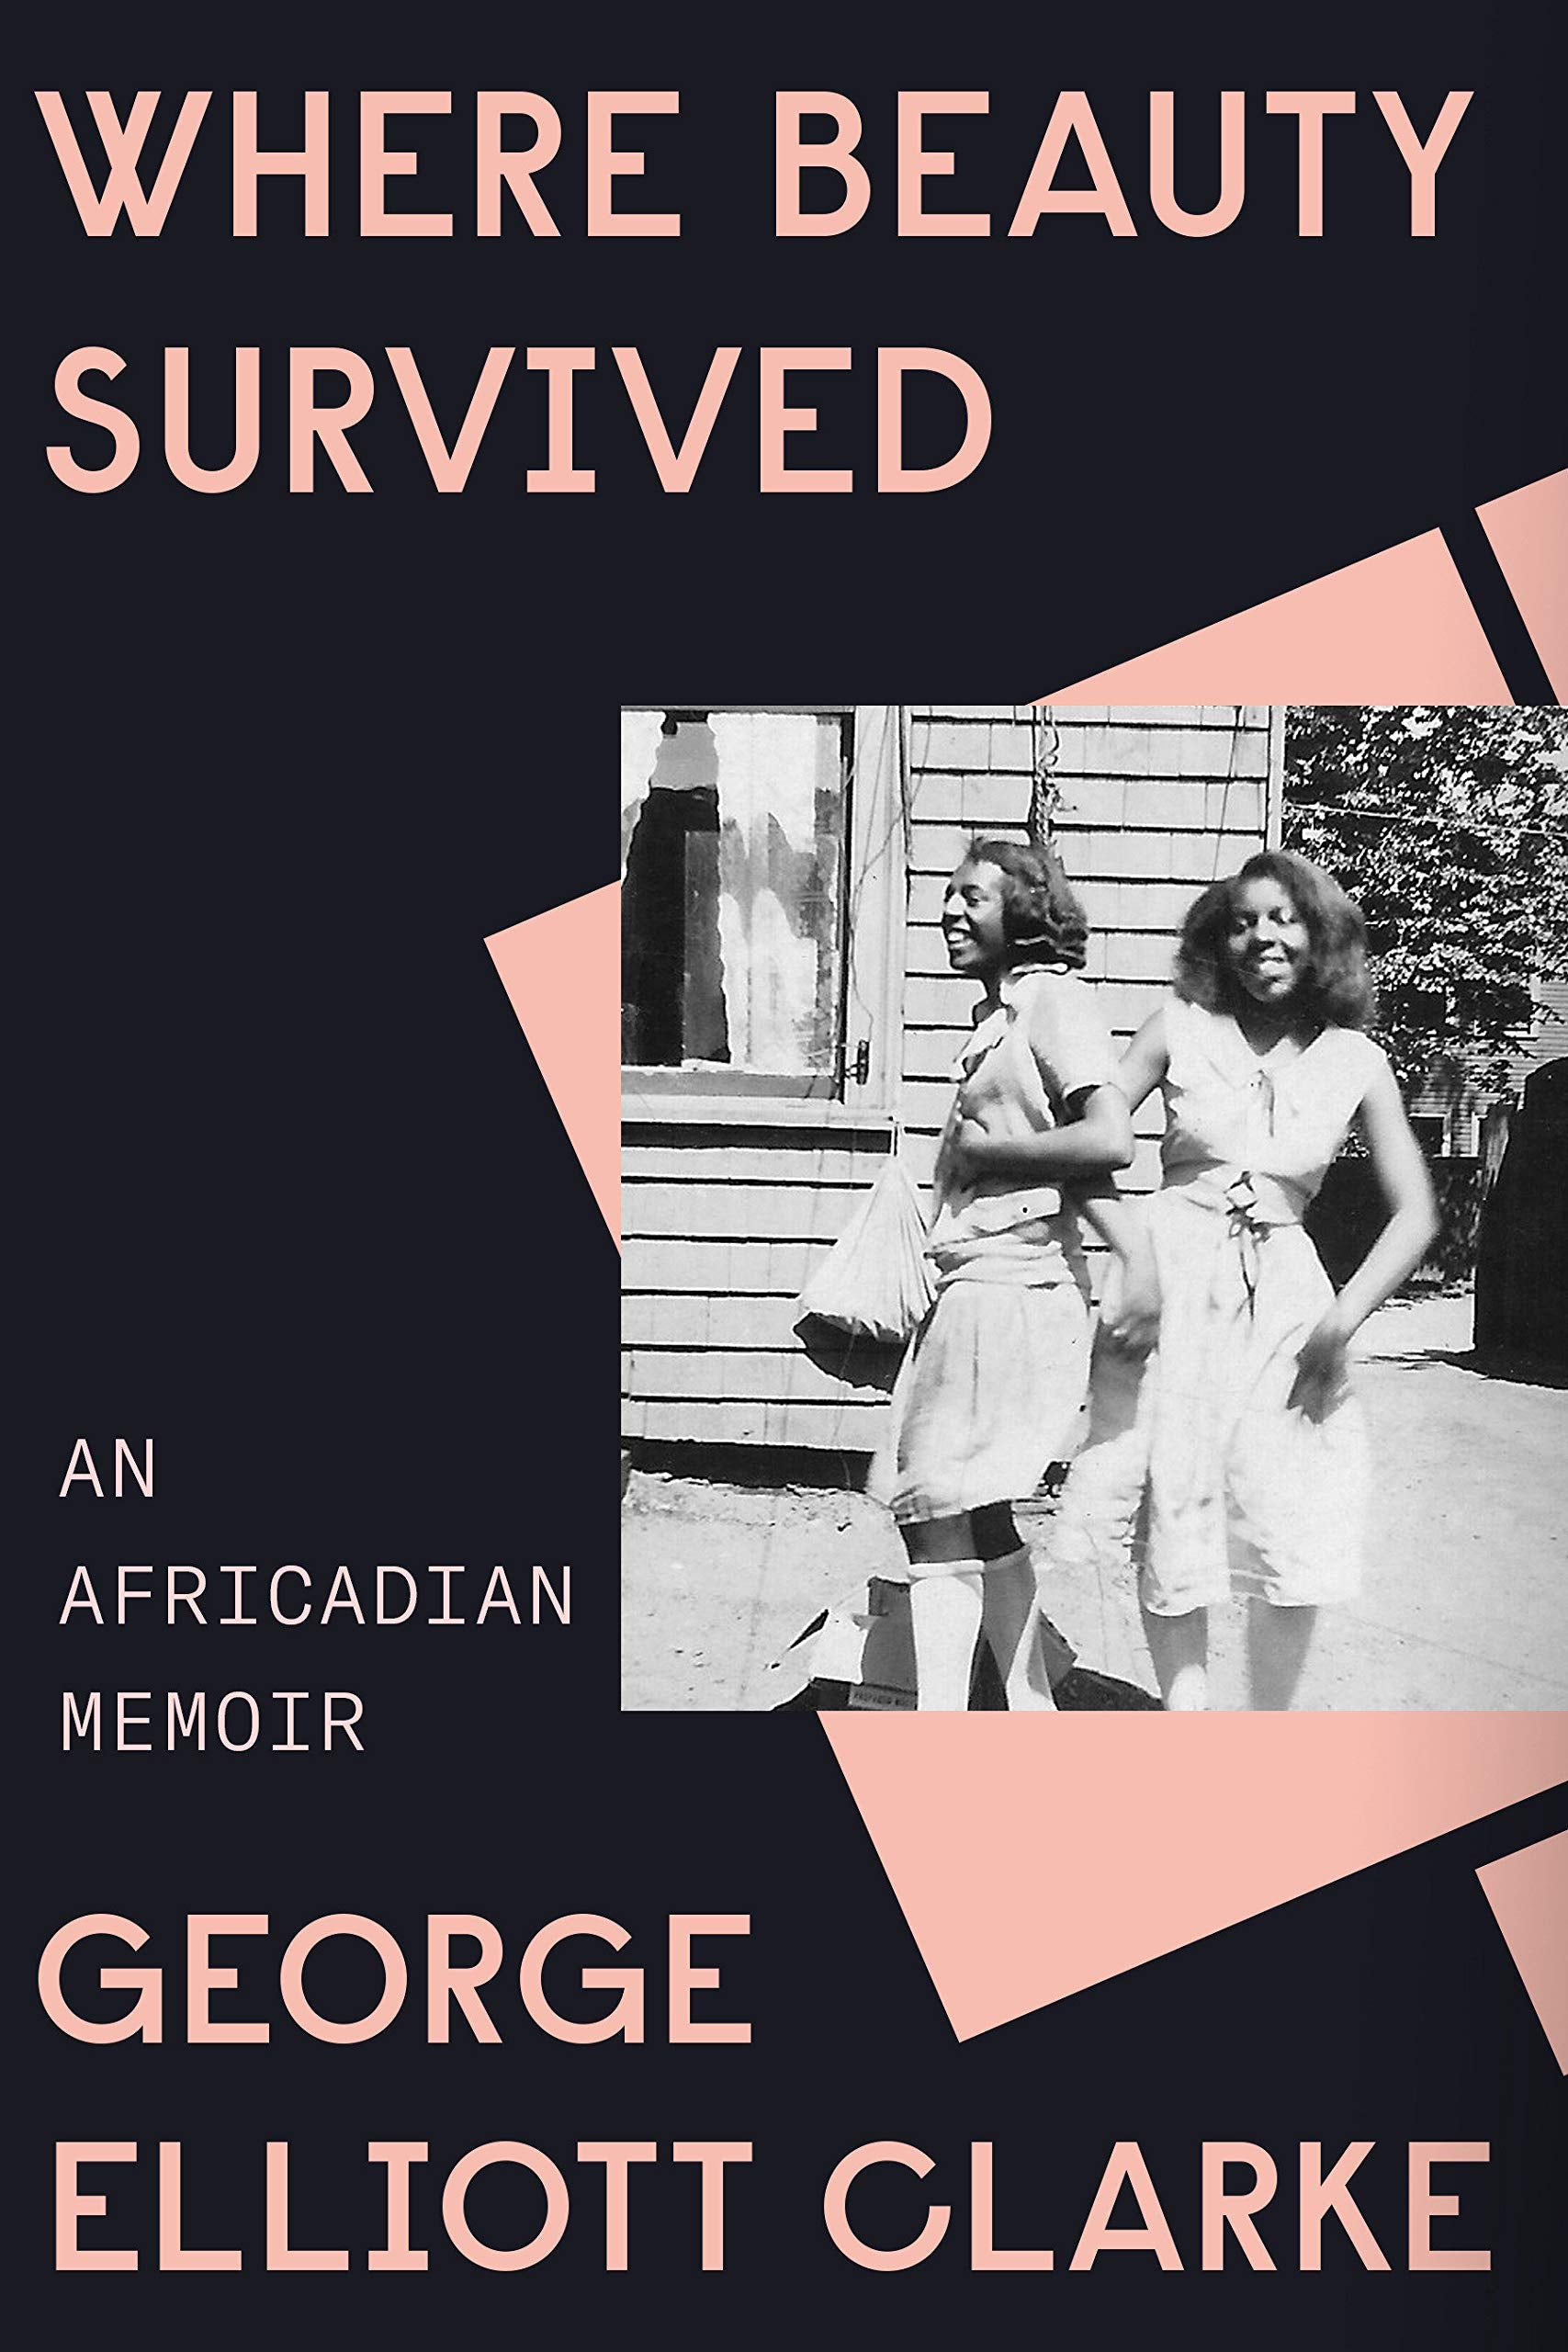 Where Beauty Survived: An Africadian Memoir Hardcover by George Elliott Clarke